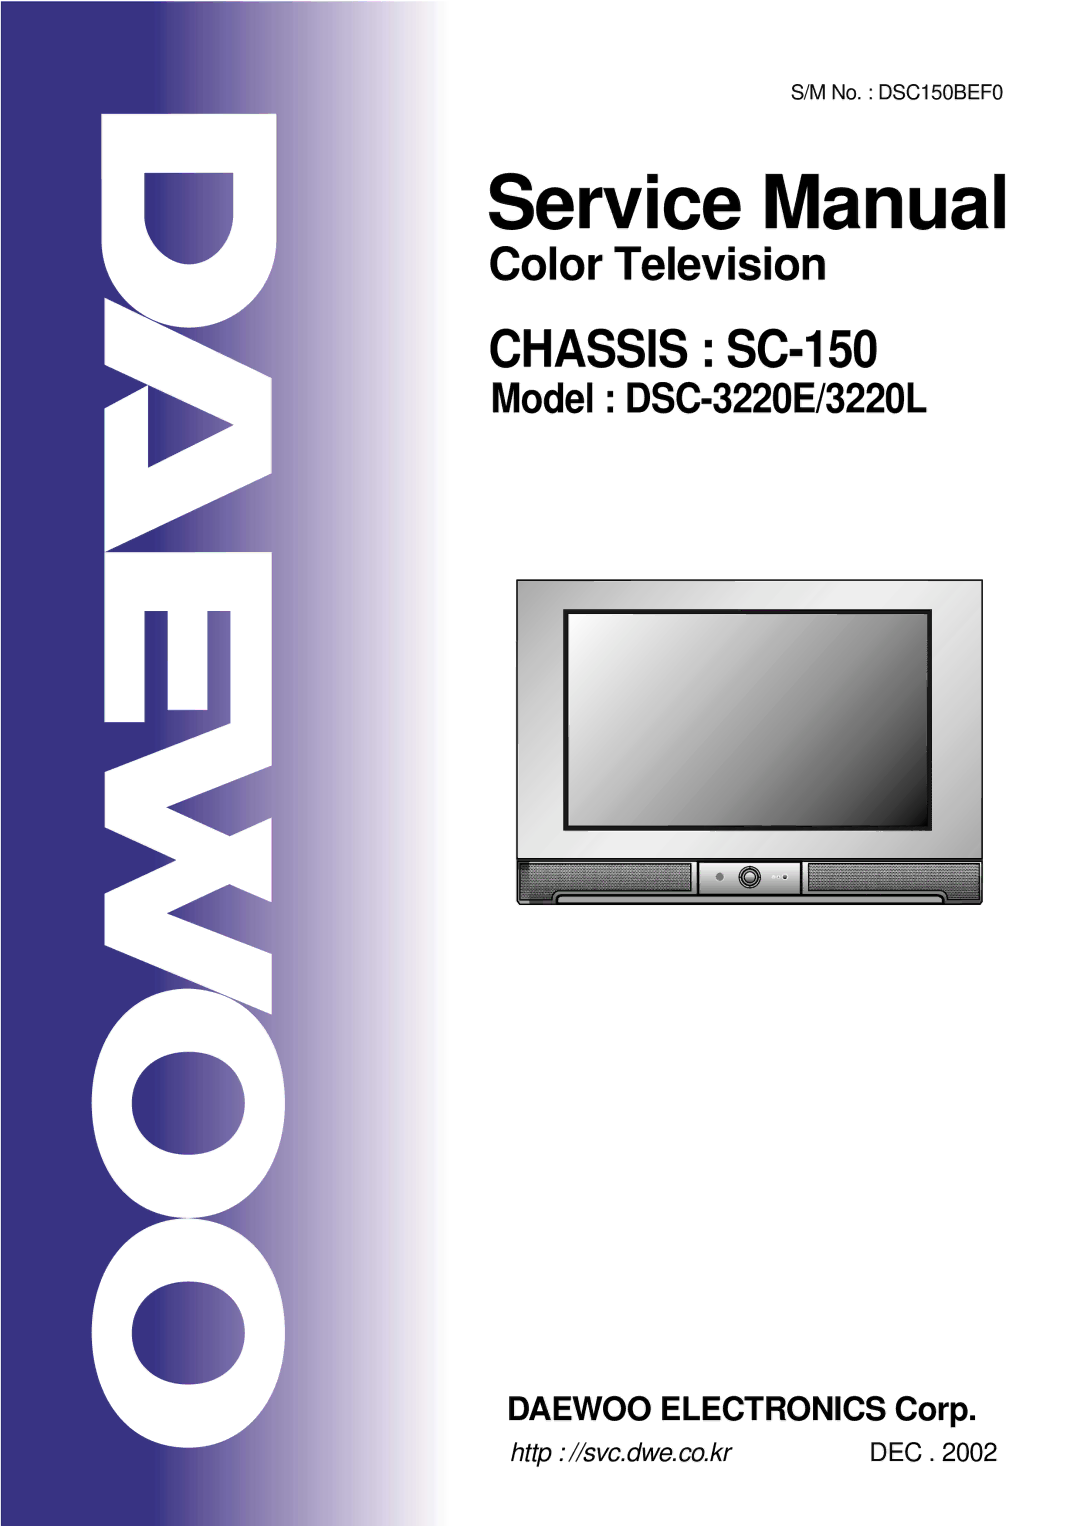 Daewoo DSC-3220E/3220L service manual Chassis SC-150 